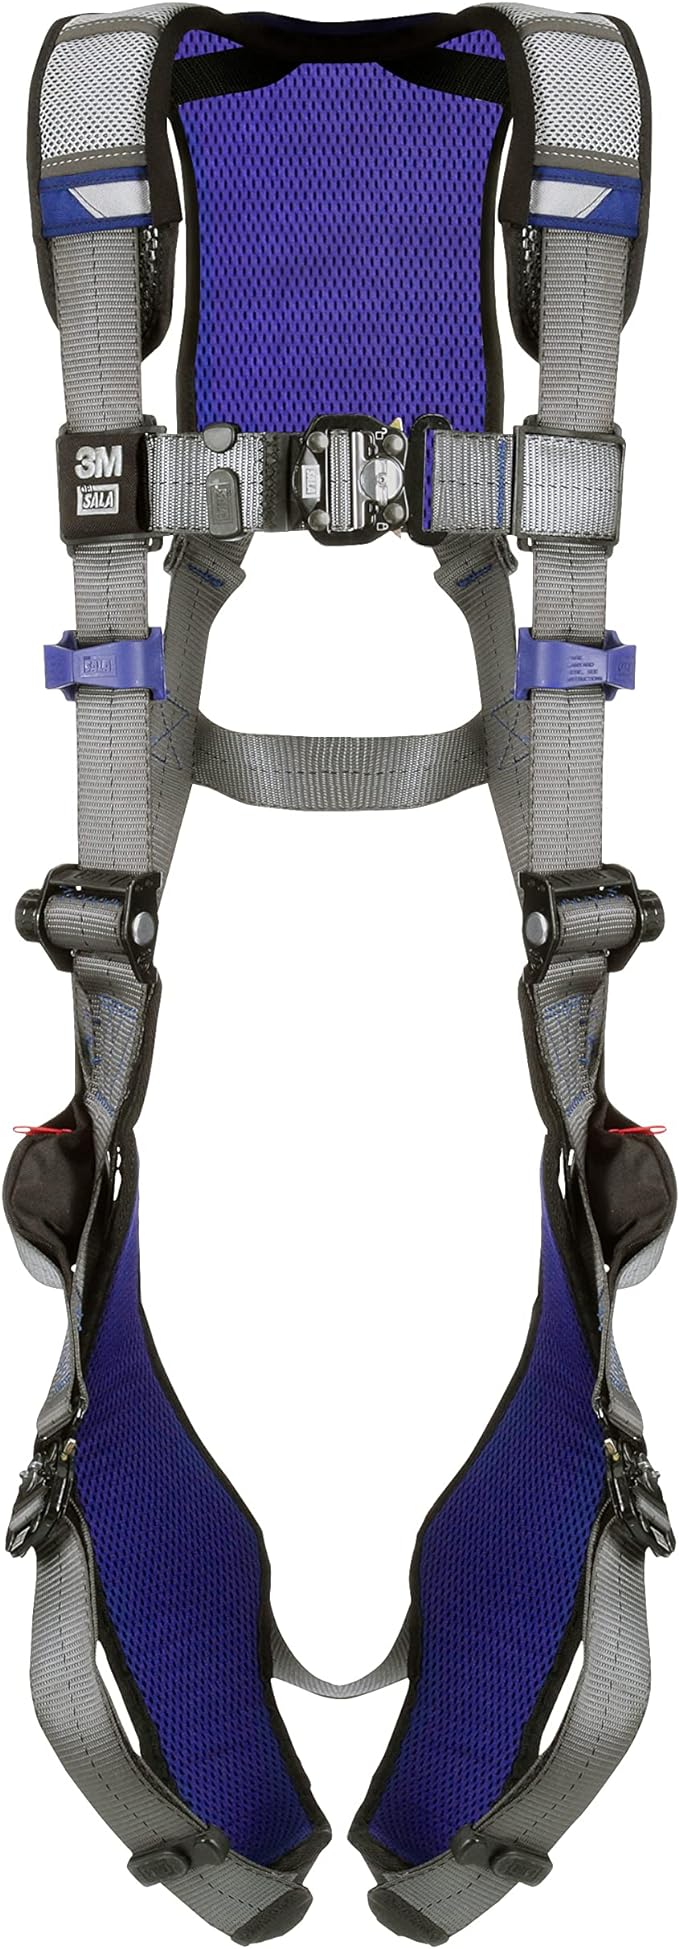 X200 COMFORT VEST SAFETY HARNESS - Harnesses